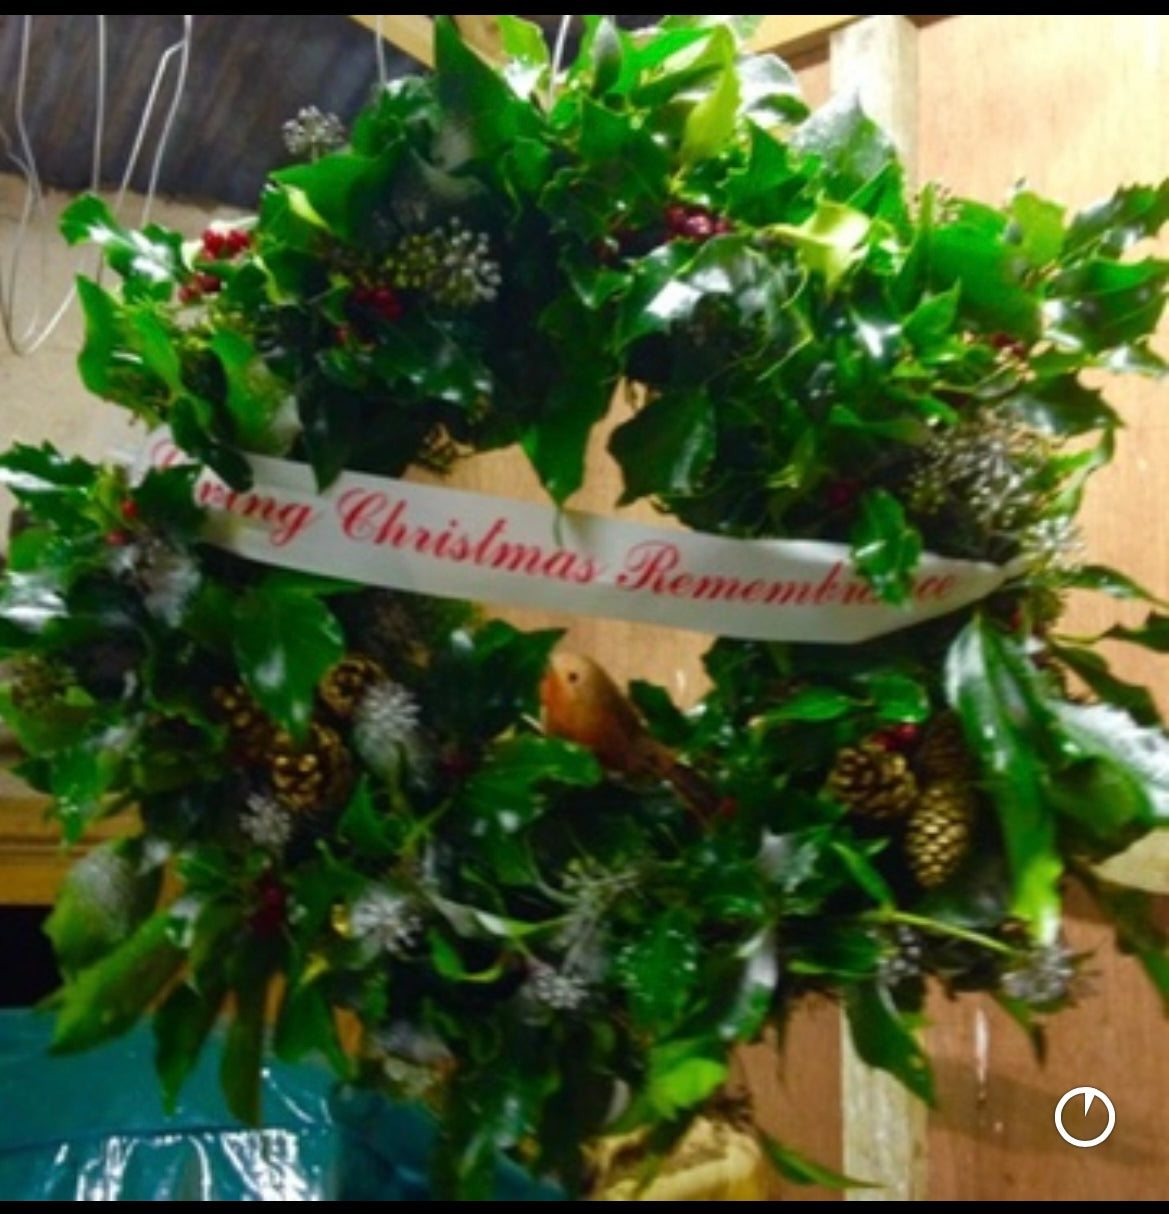 Circular Christmas “In Loving Remembrance” Wreath